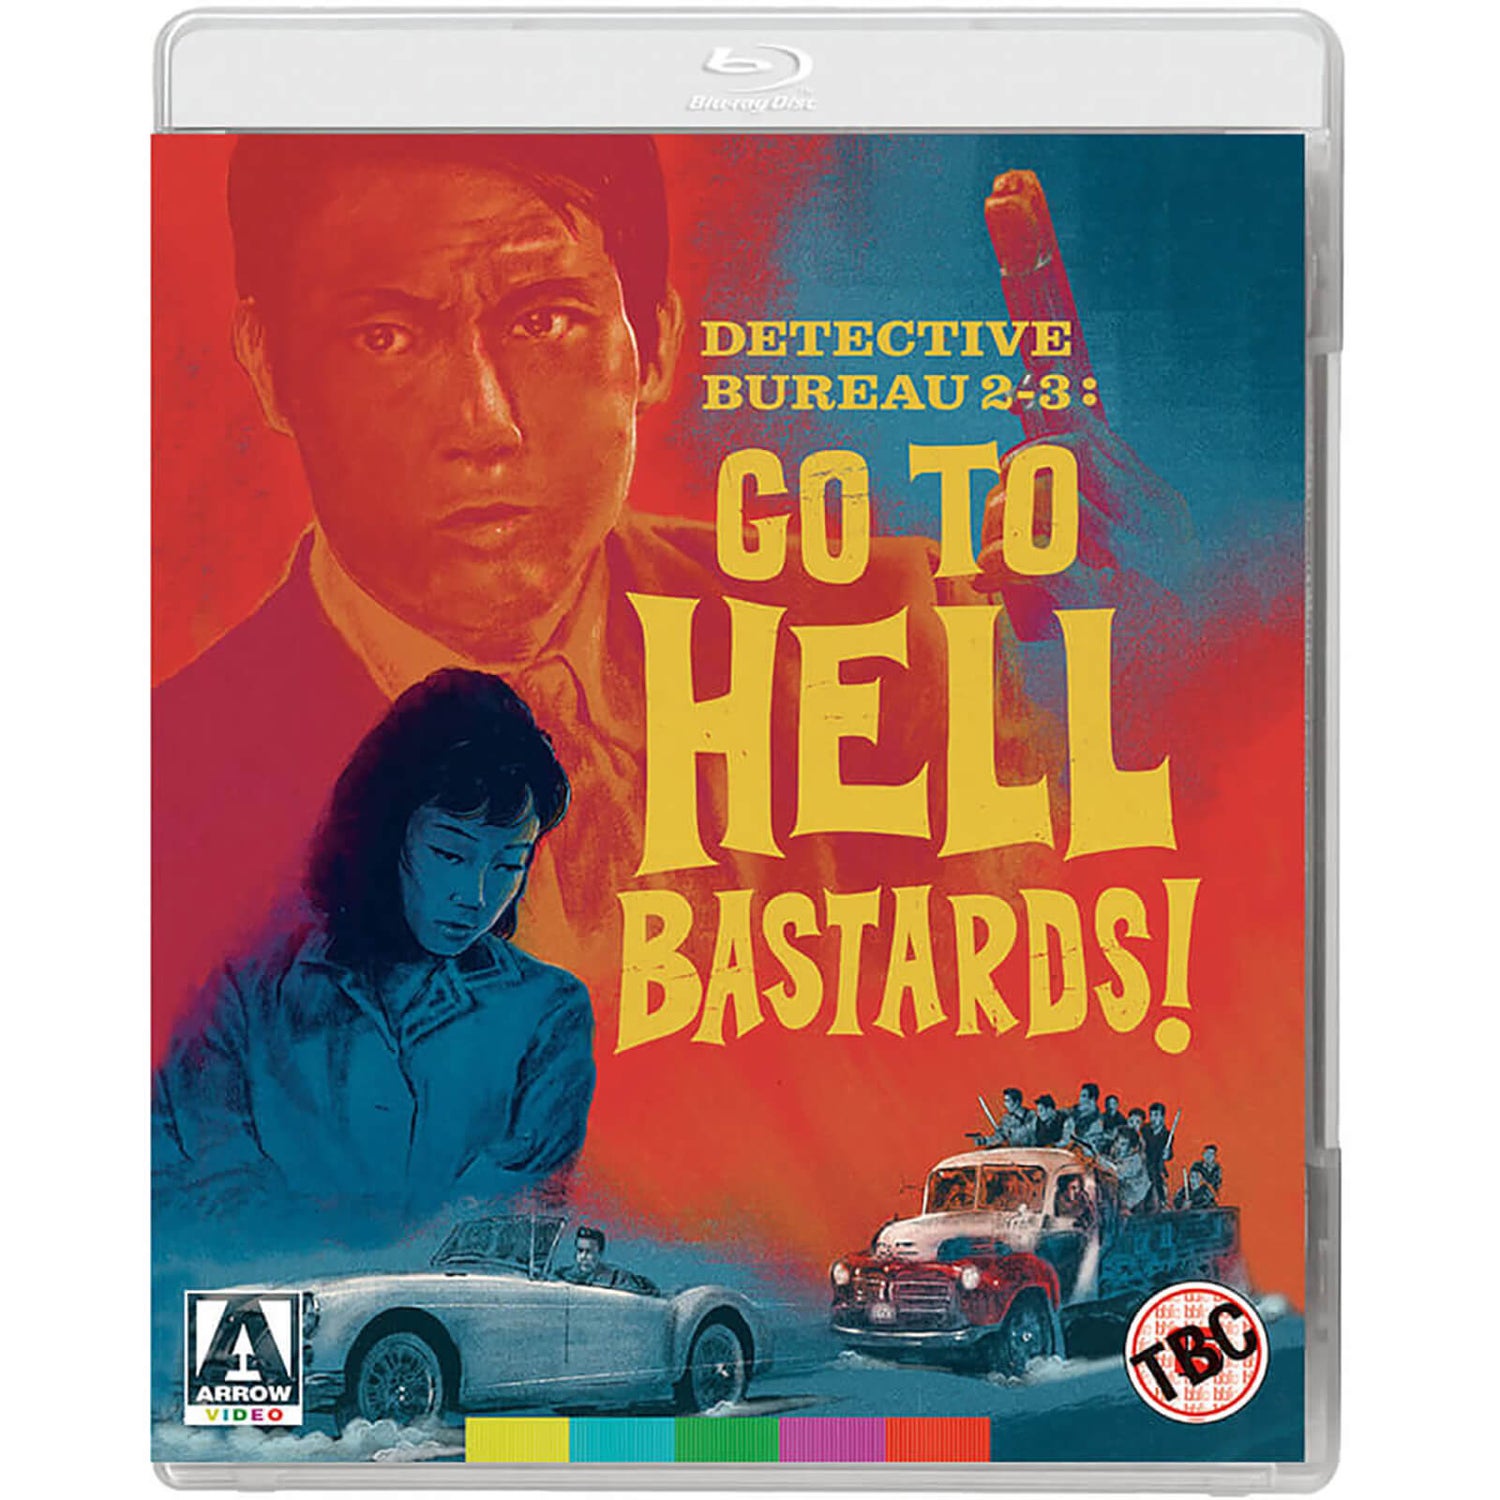 Detective Bureau 2-3: Go To Hell Bastards! Blu-ray